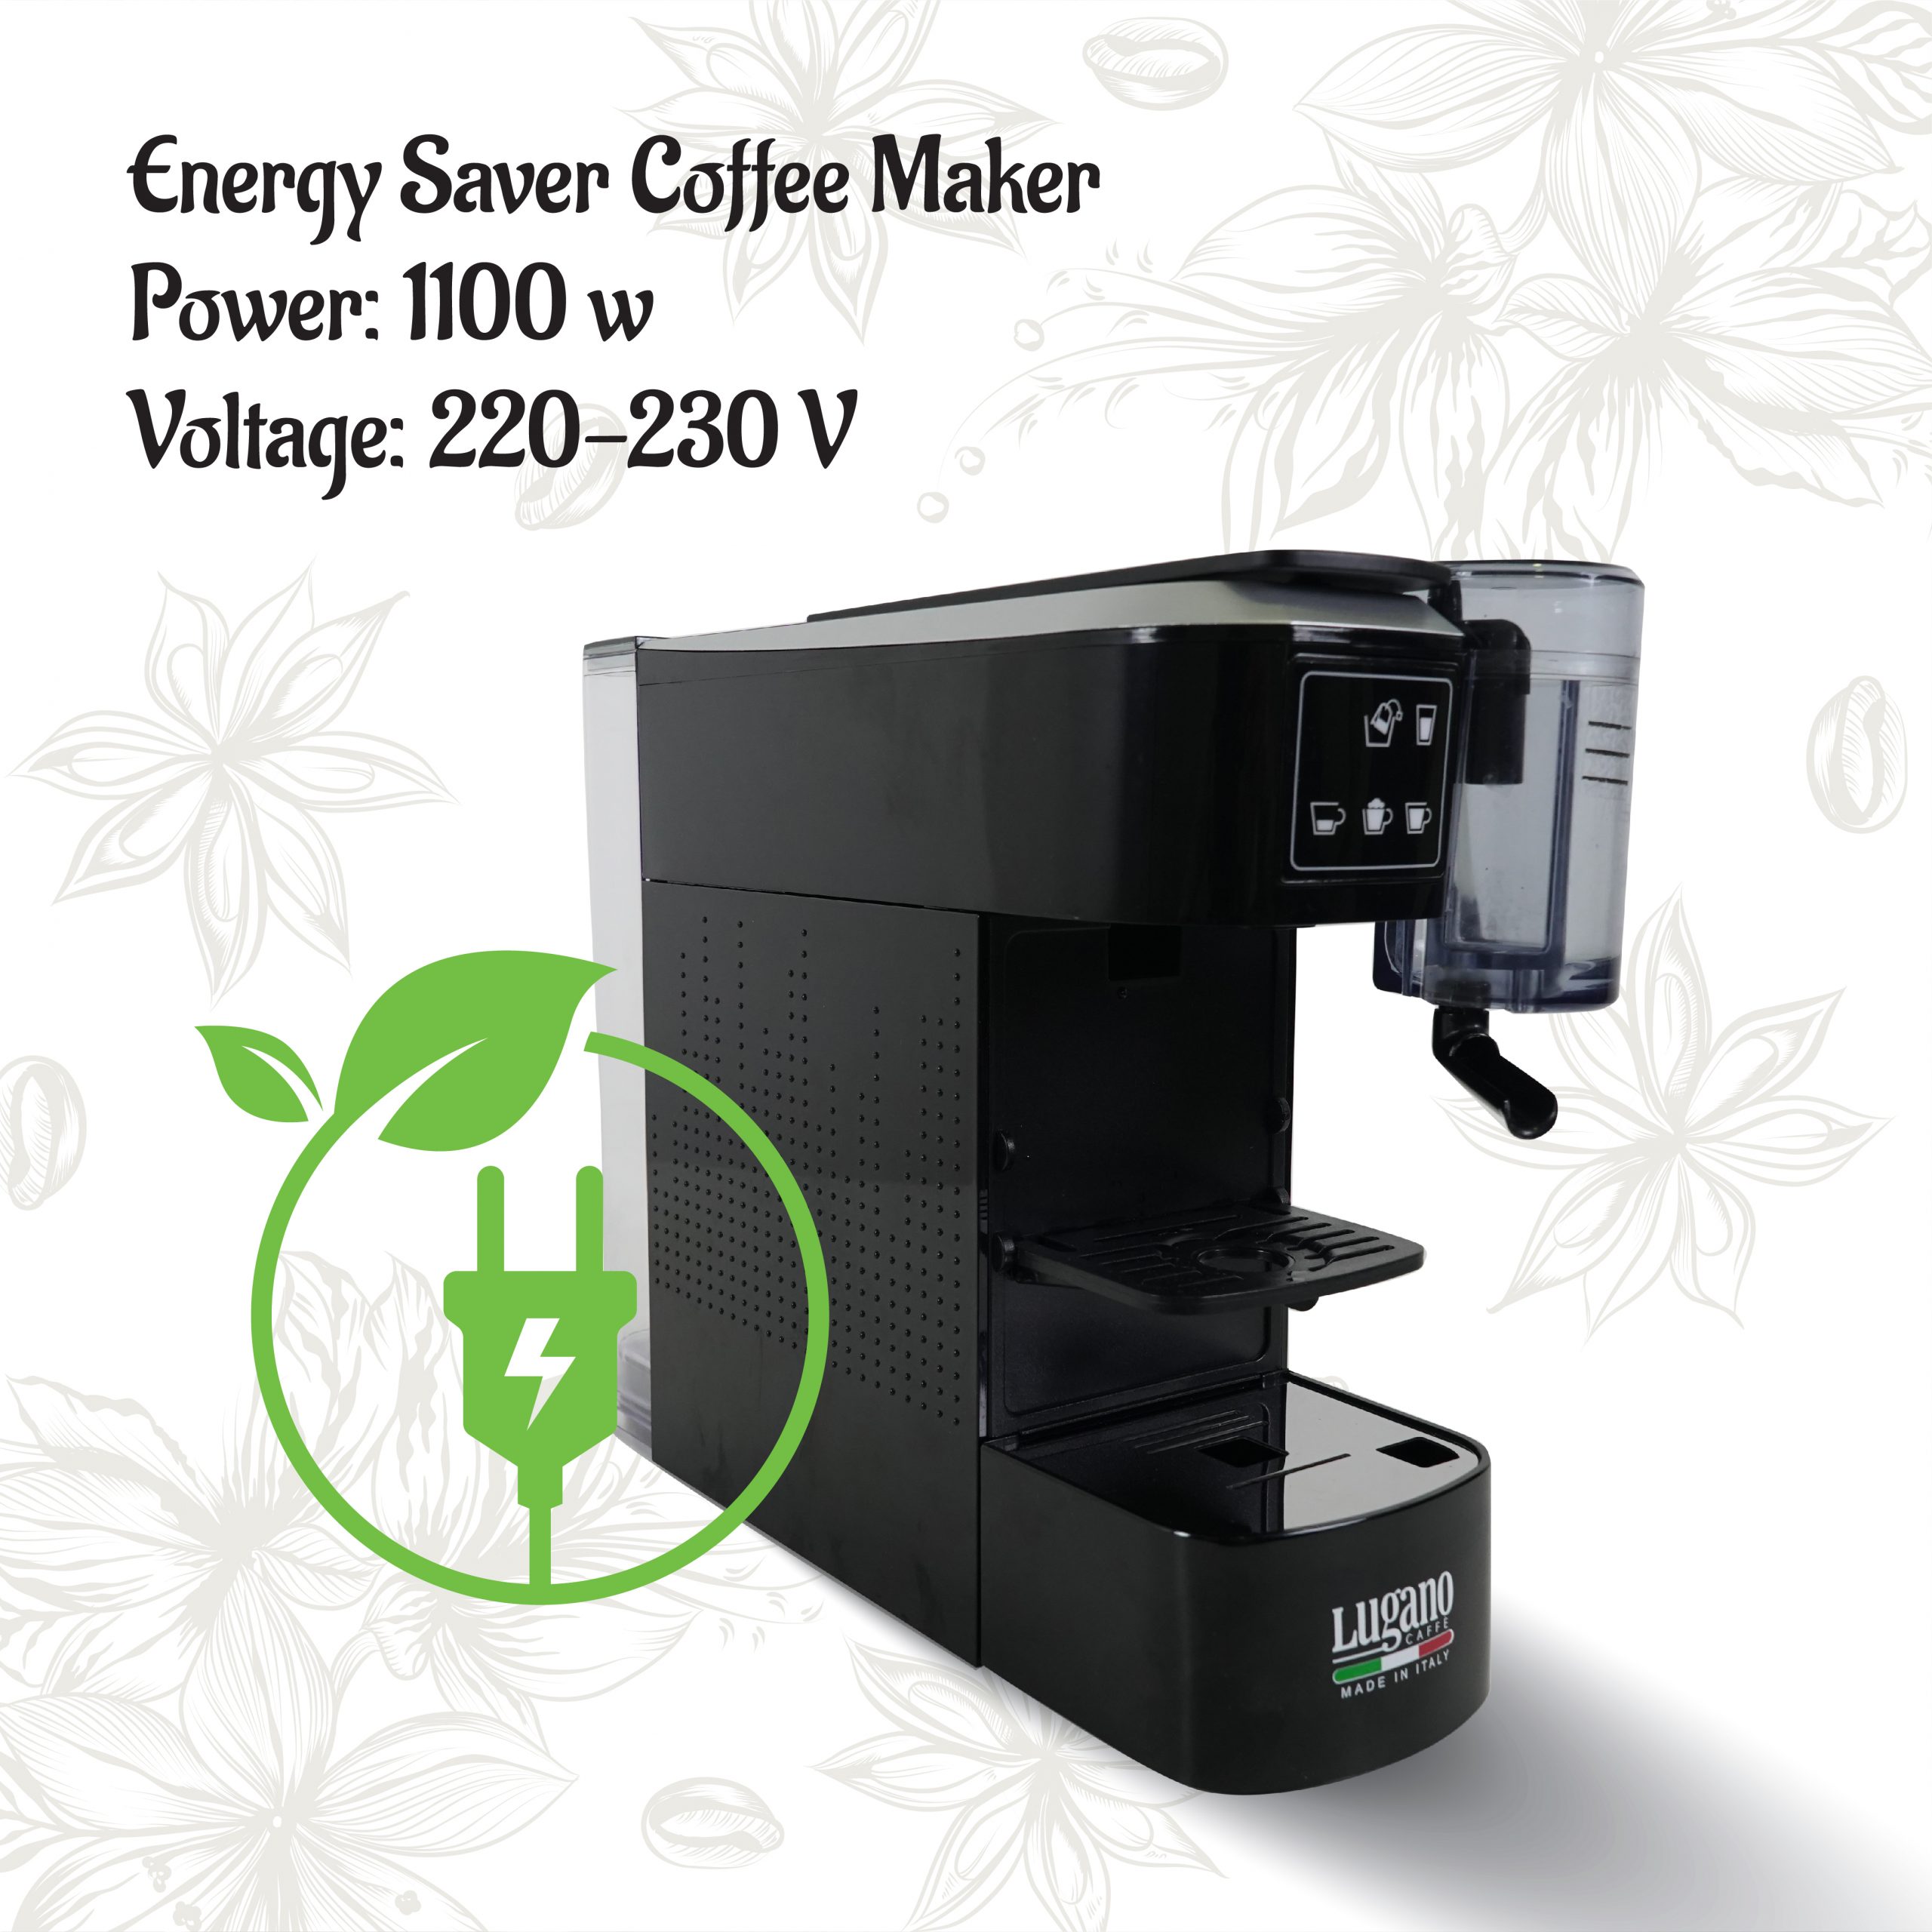 Lugnao Creativa Energy Saver Coffee Maker